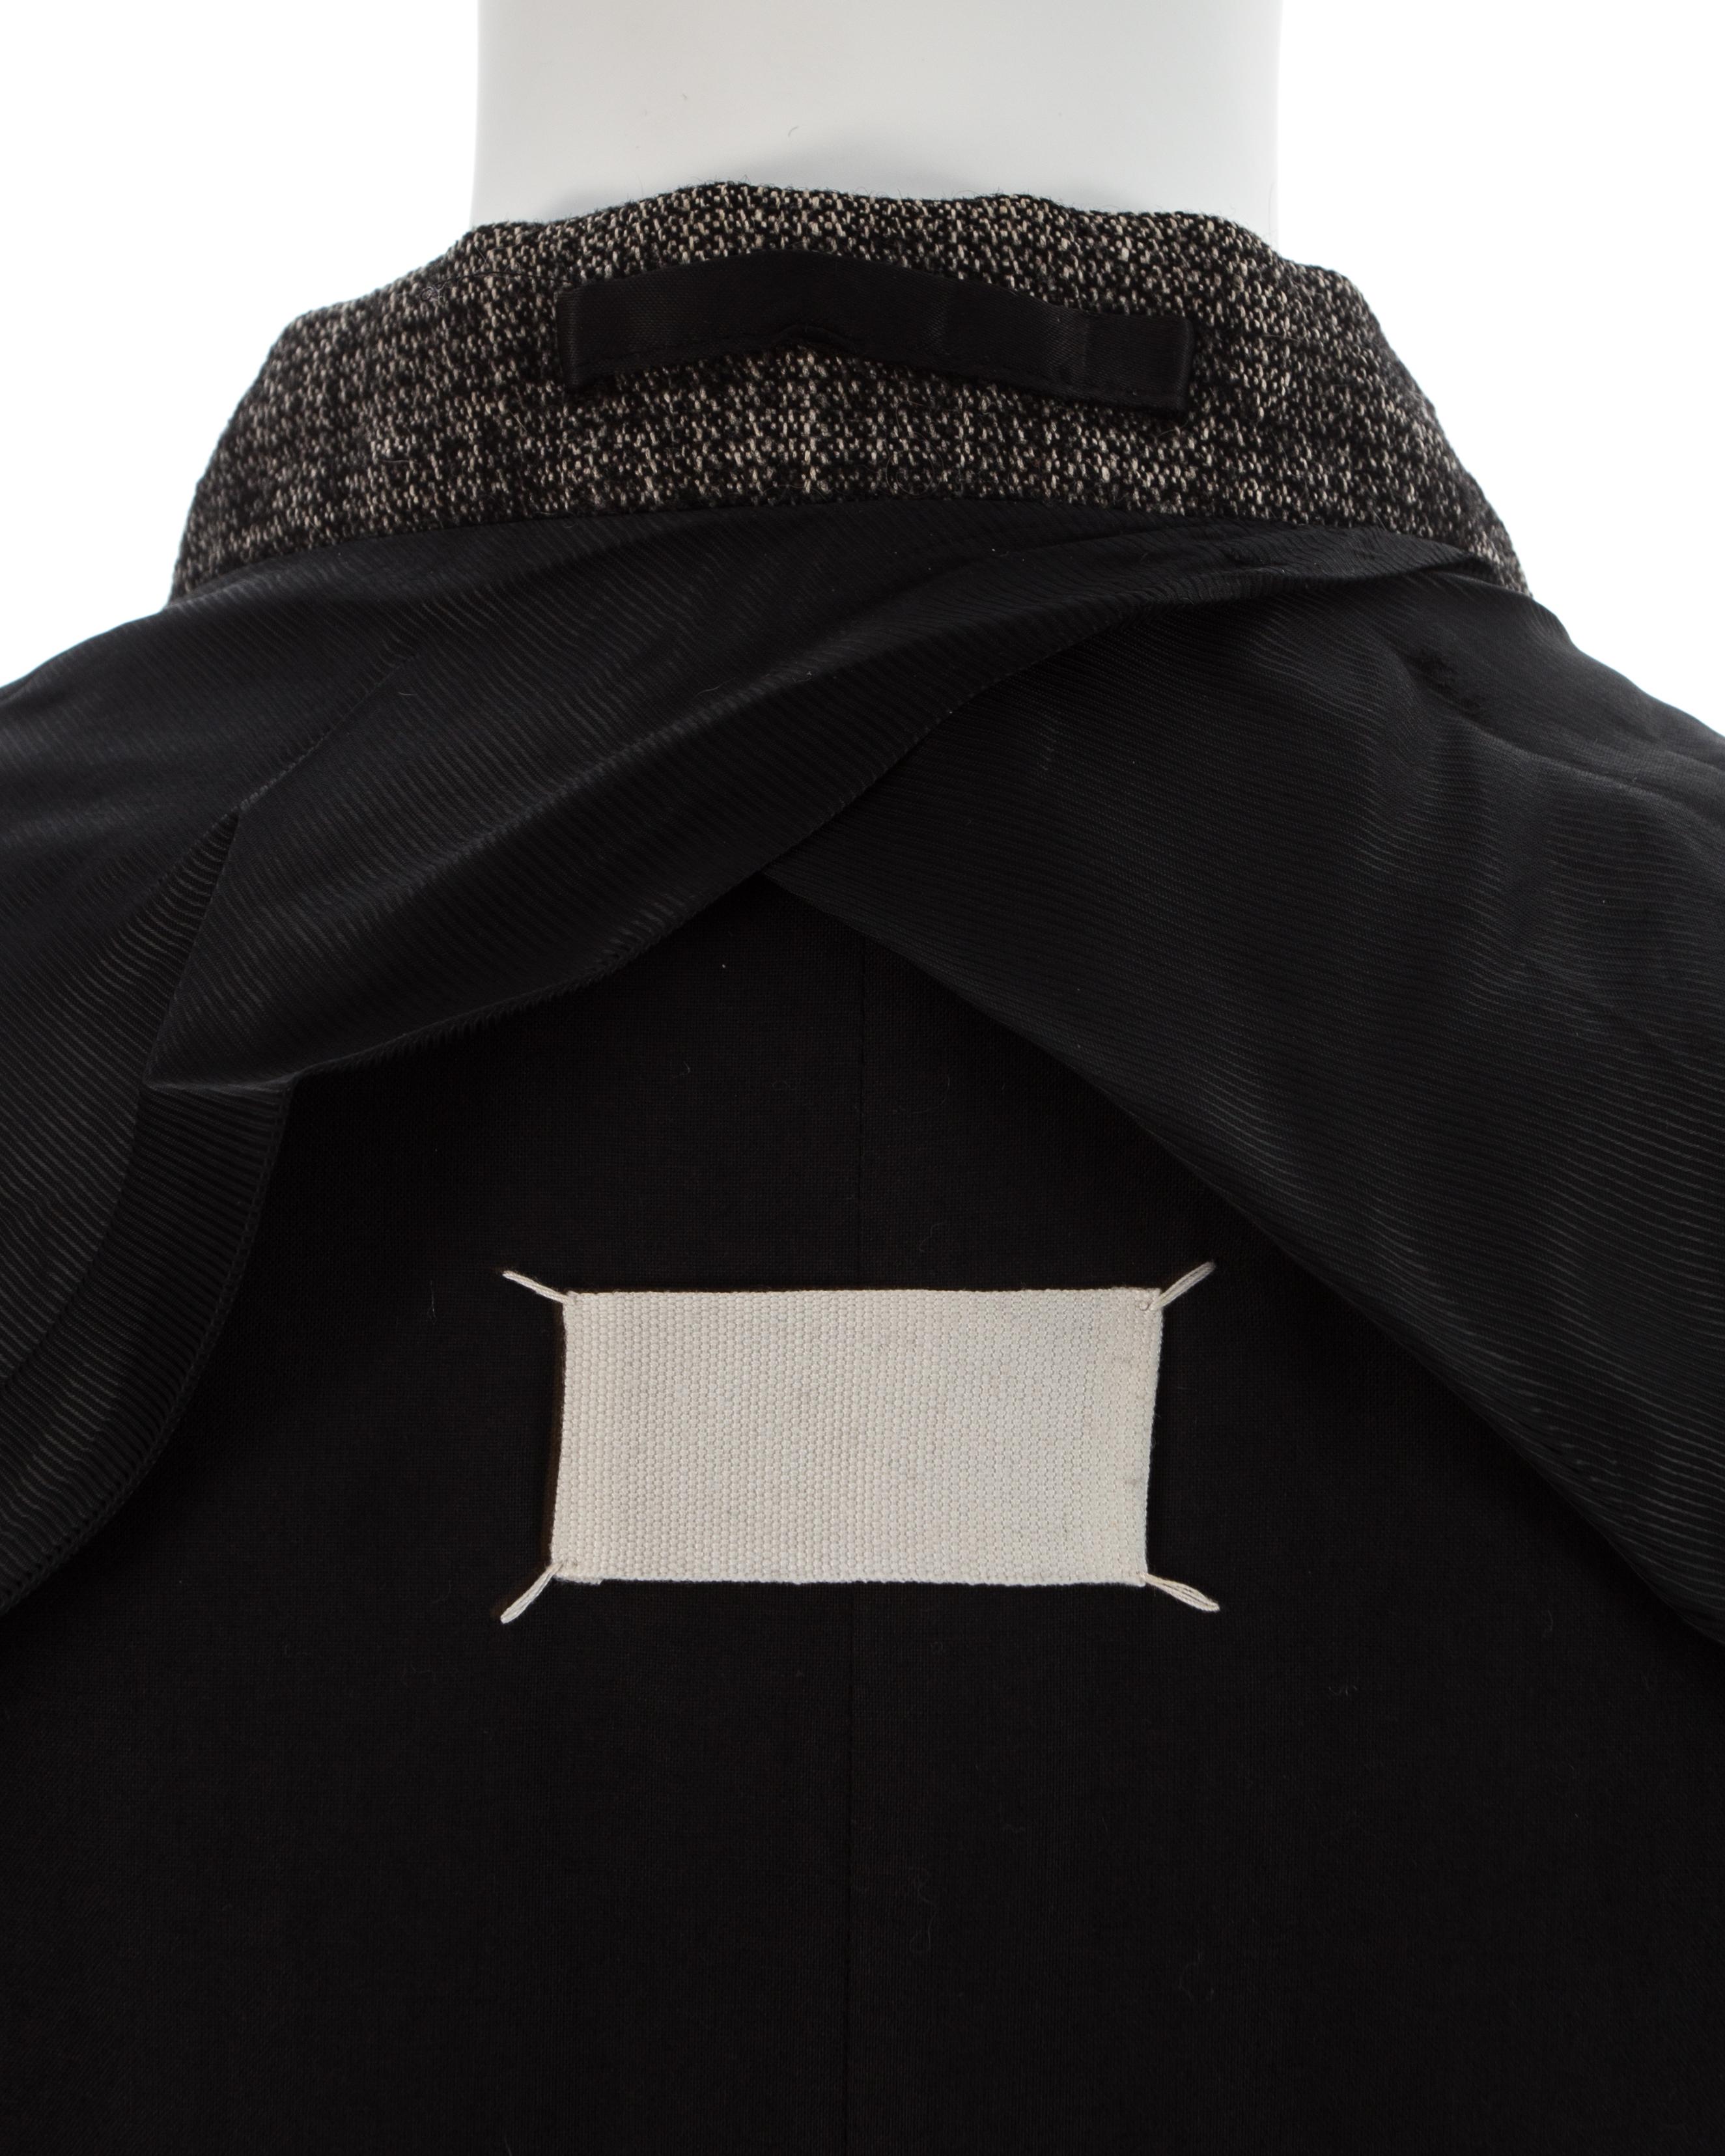 Martin Margiela grey wool and linen XXL size 78 double inside coat, fw 2000 6